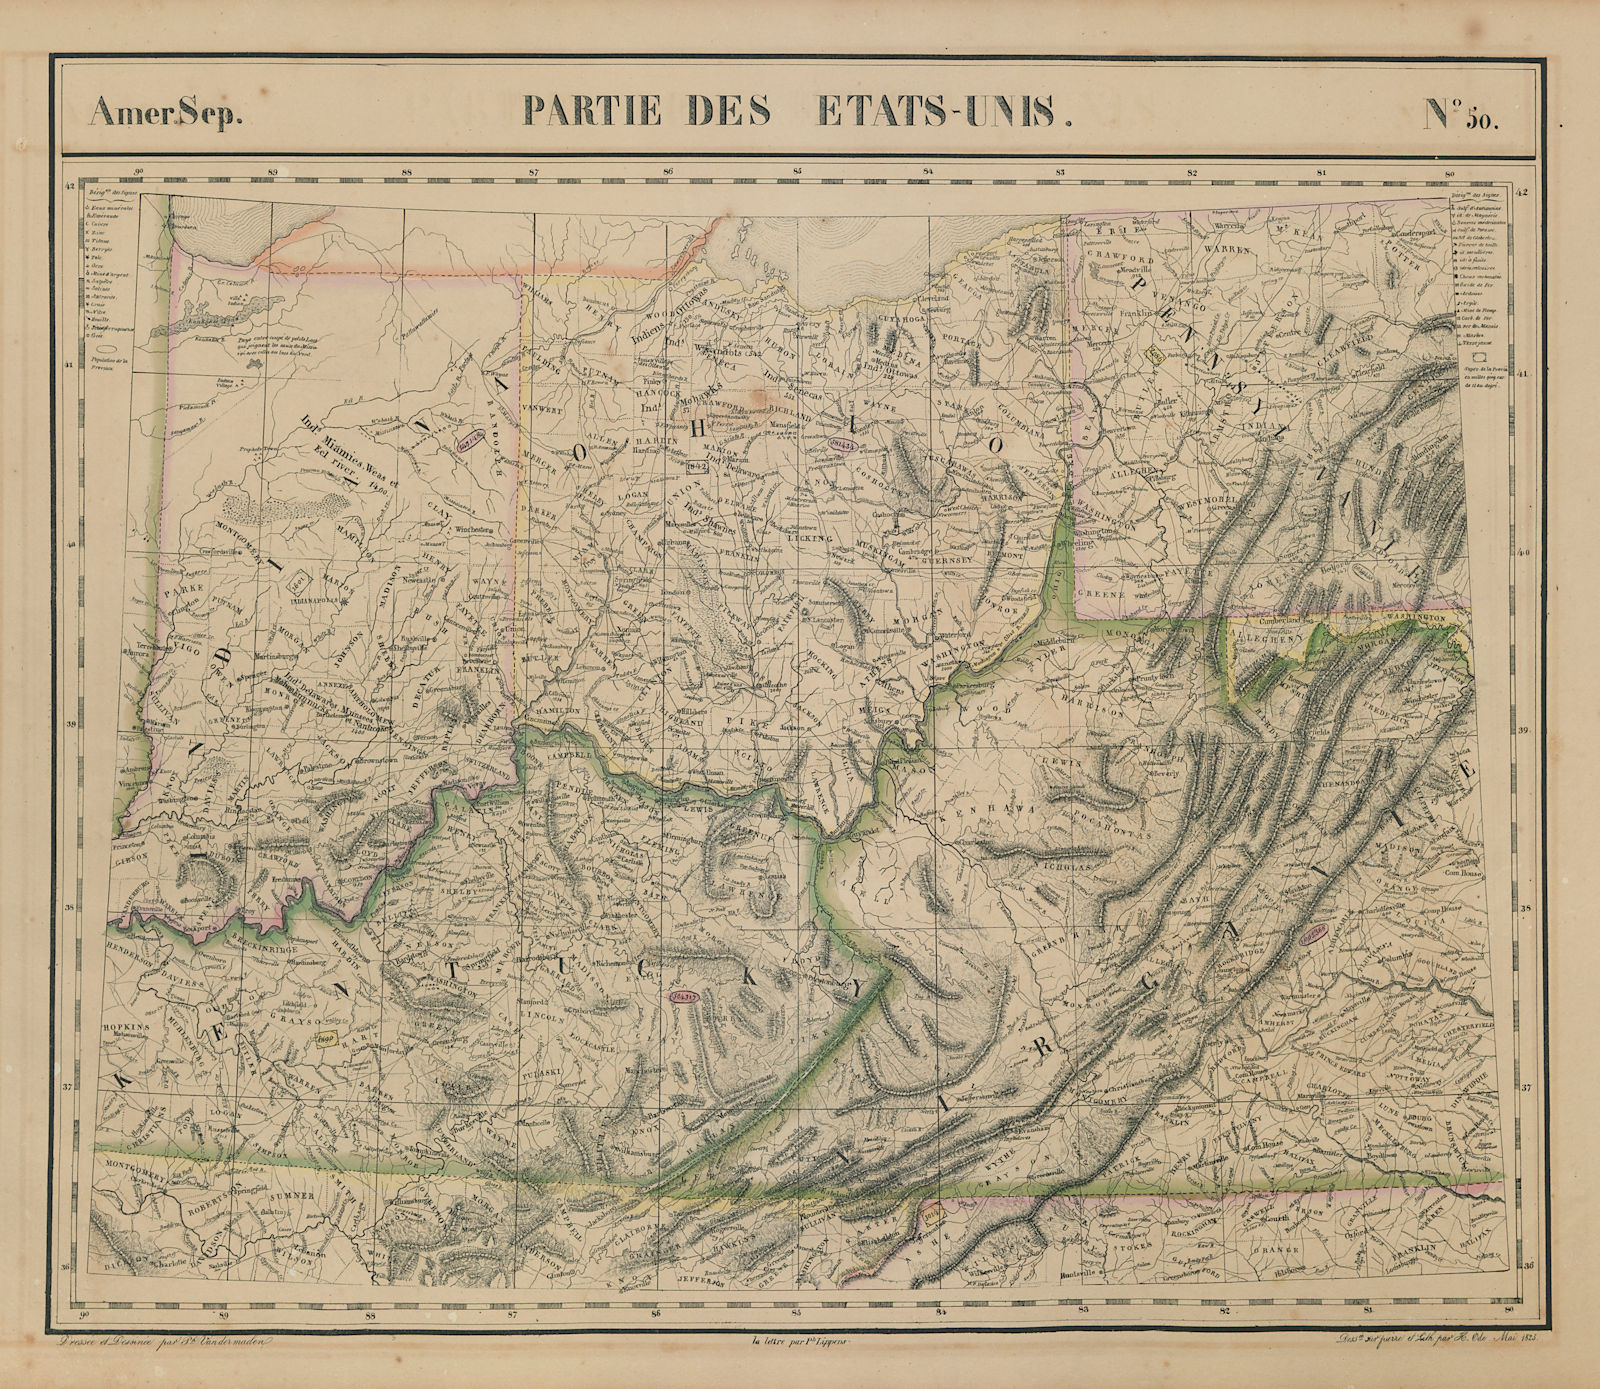 Amér Sep Parties des États-Unis #50 Ohio KY WV VA IN PA. VANDERMAELEN 1827 map